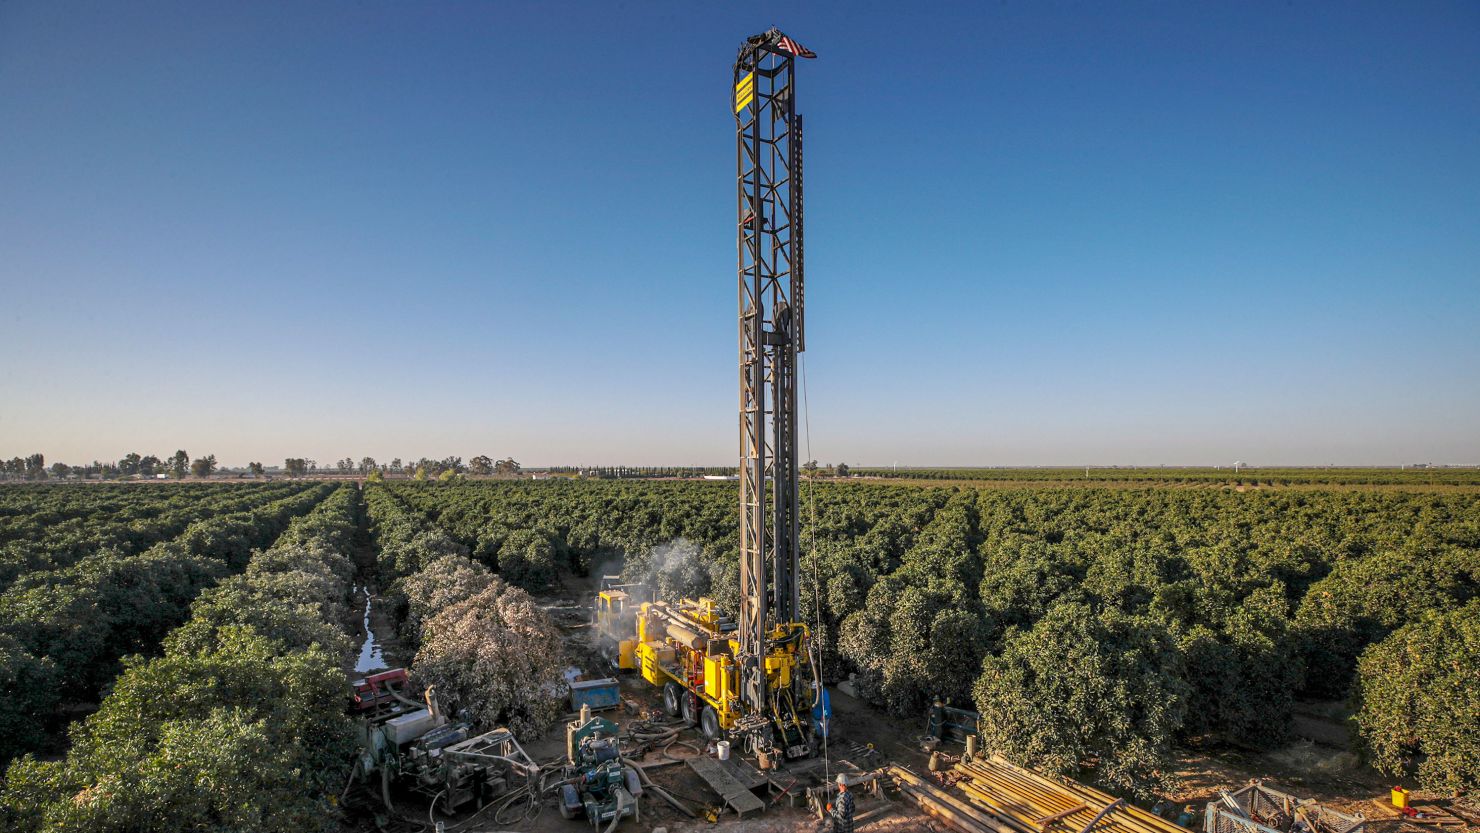 Terra Bella, CA - October 14: Matt Davis's company drills a 1300 feet deep well in an orchard at Setton Farms on Thursday, Oct. 14, 2021 in Terra Bella, CA. (Irfan Khan / Los Angeles Times via Getty Images)